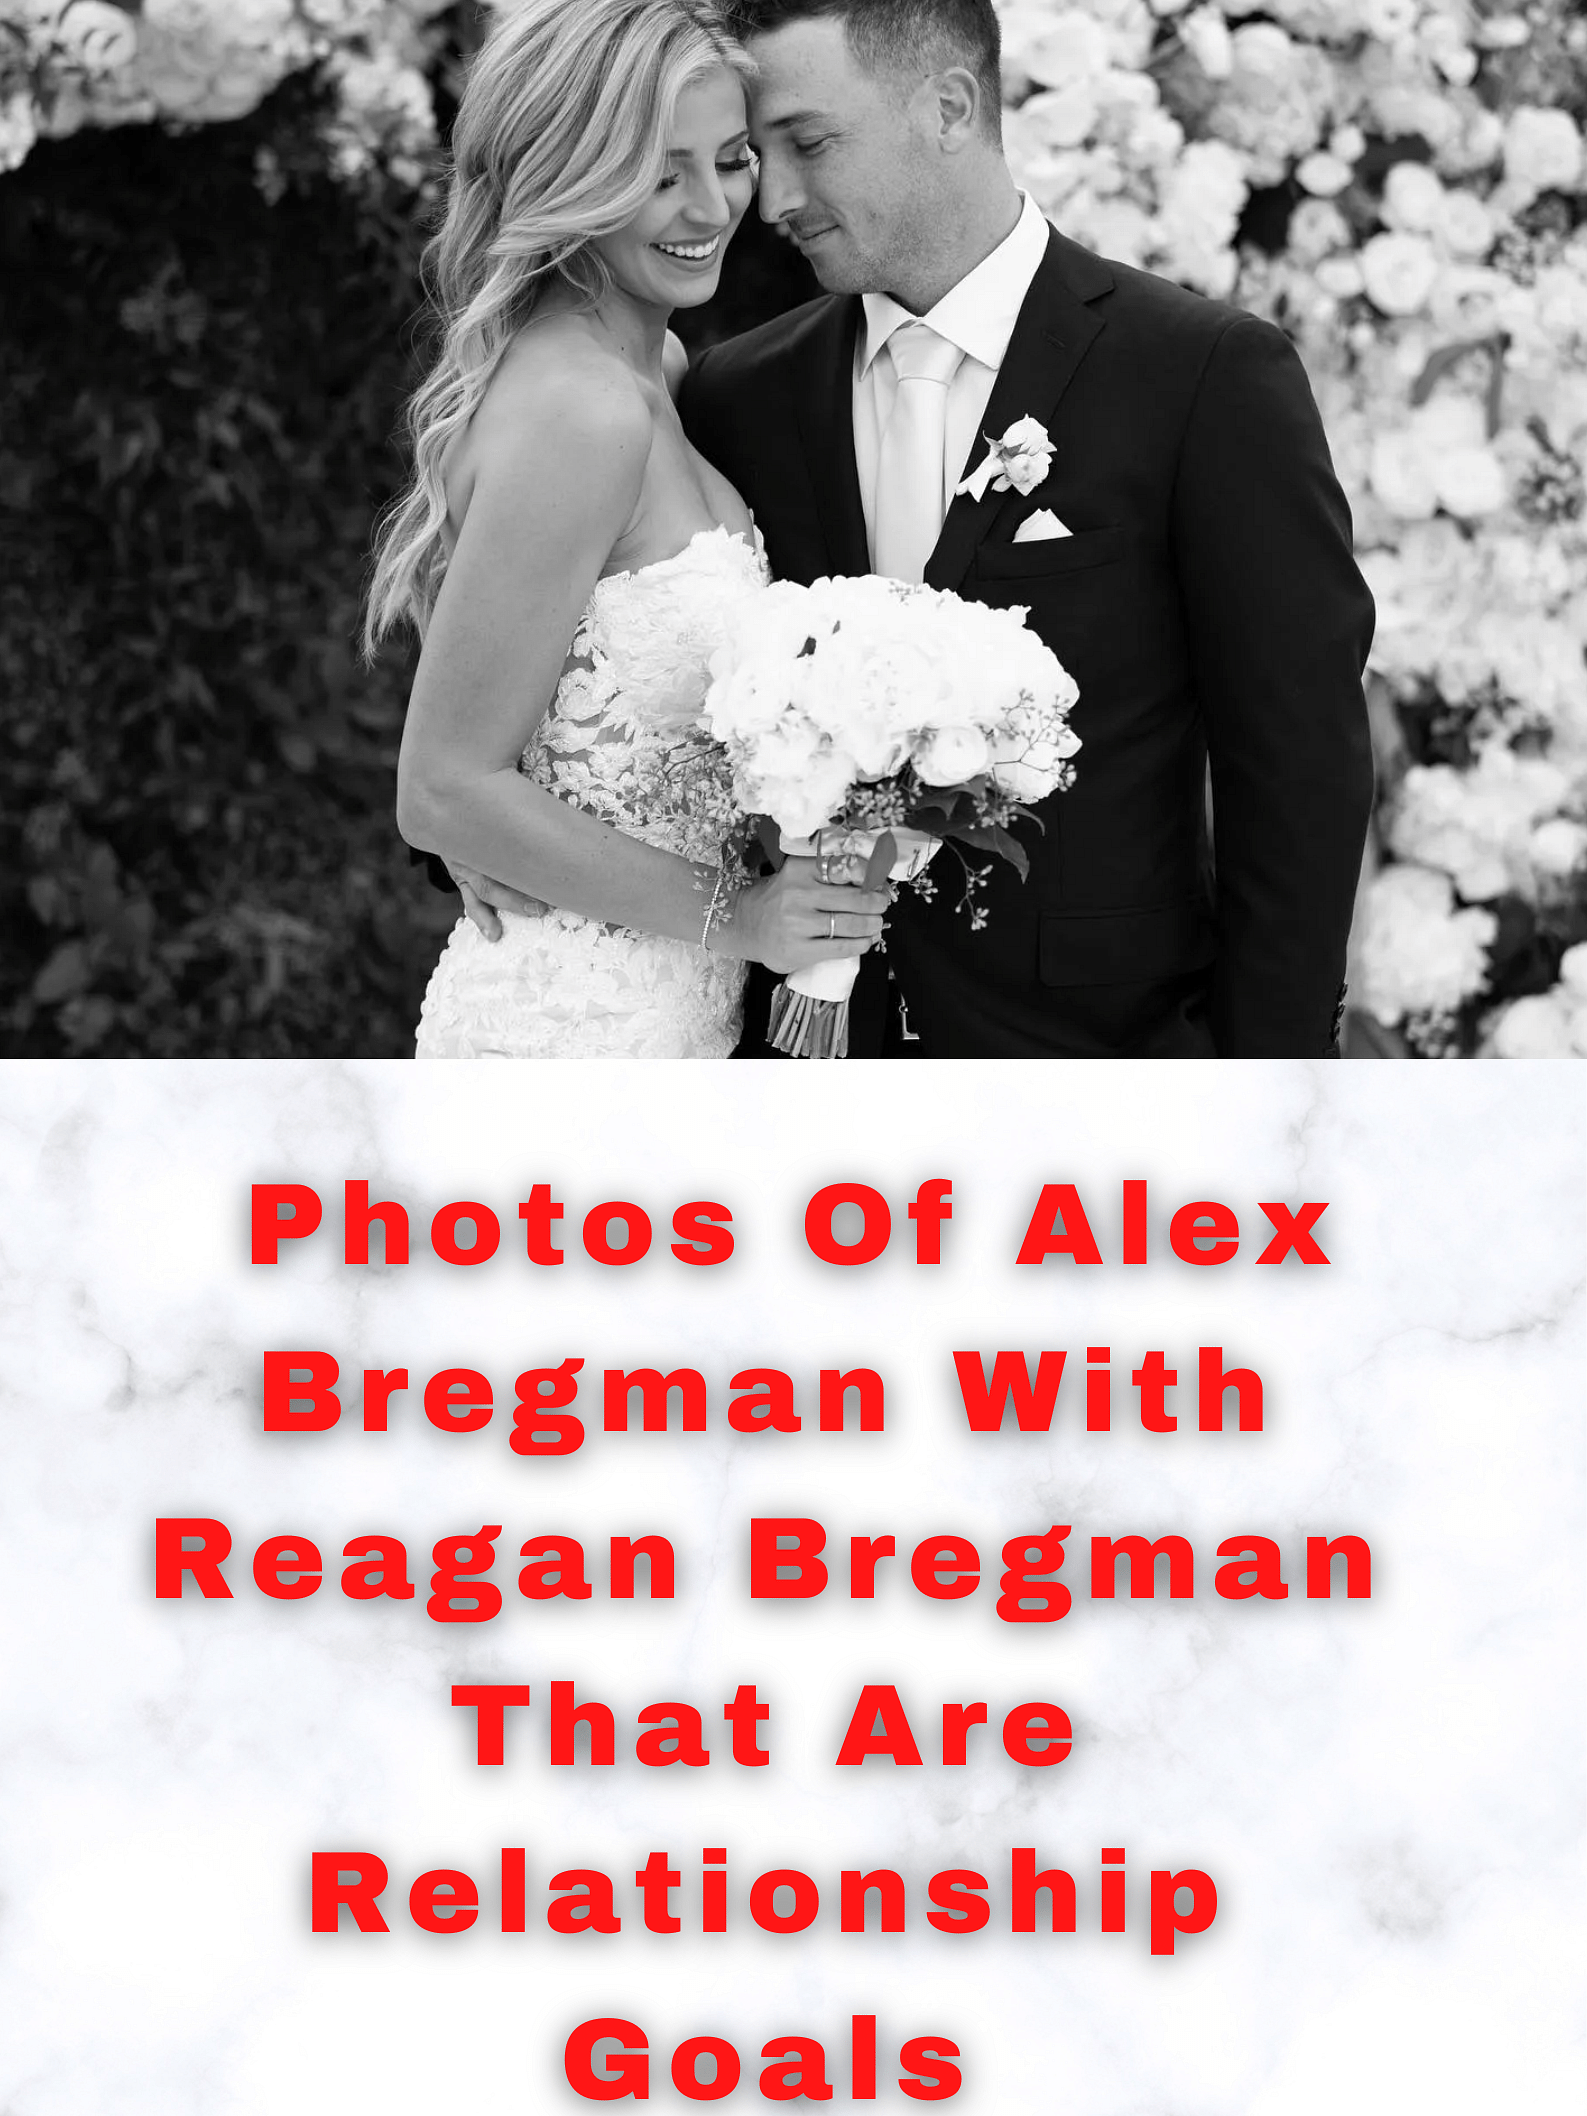 Photos Of Alex Bregman & Reagan Bregman That Are Relationship Goals -  Sportskeeda Stories